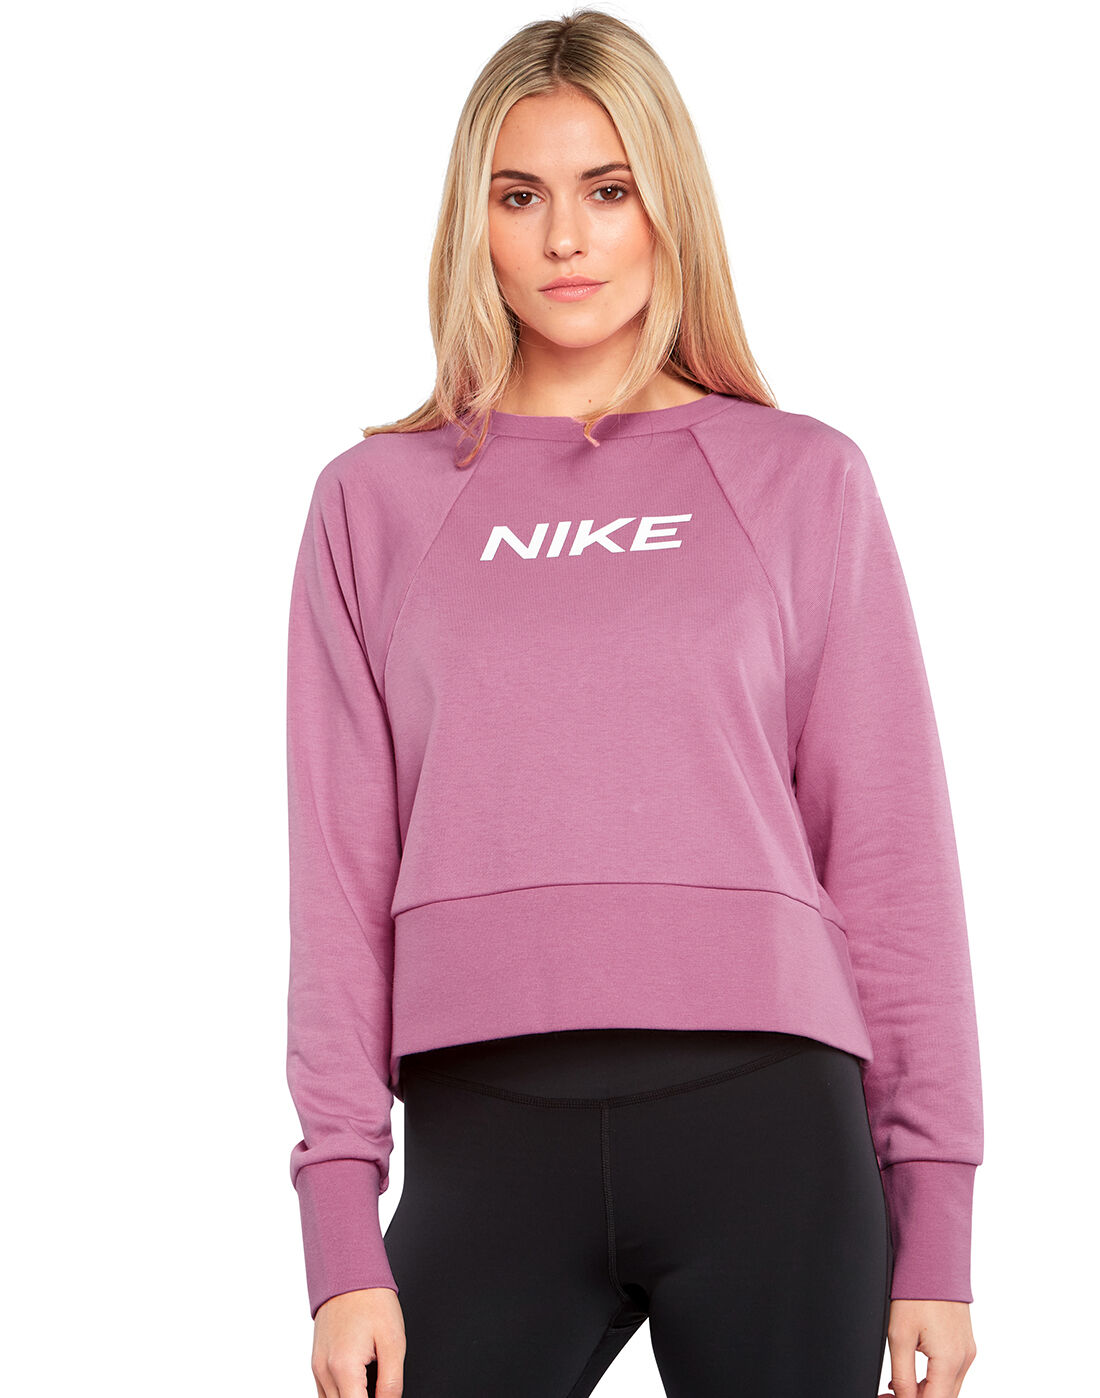 Nike Womens Dry Fit Crewneck Sweatshirt 